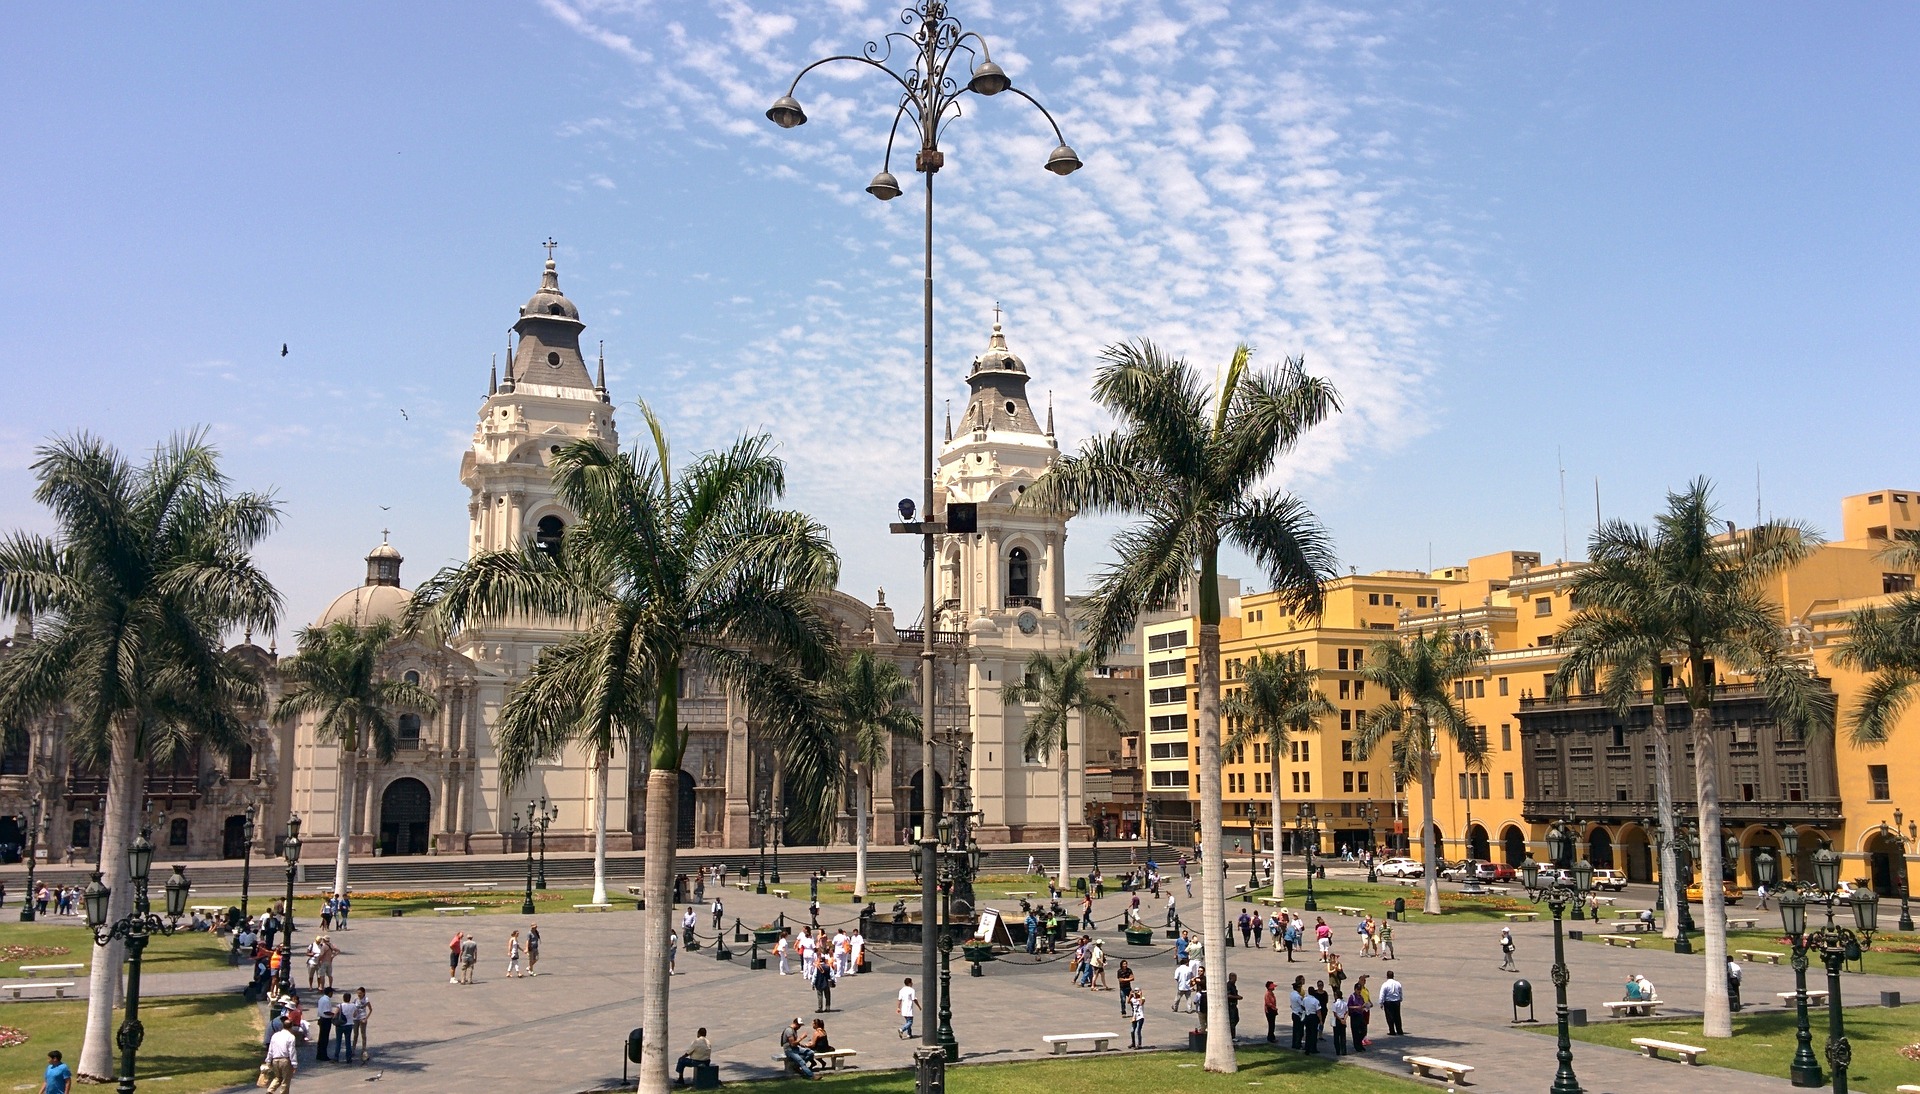 Imagen de la Plaza de Armas de Lima, en Perú. Foto: Pixabay.